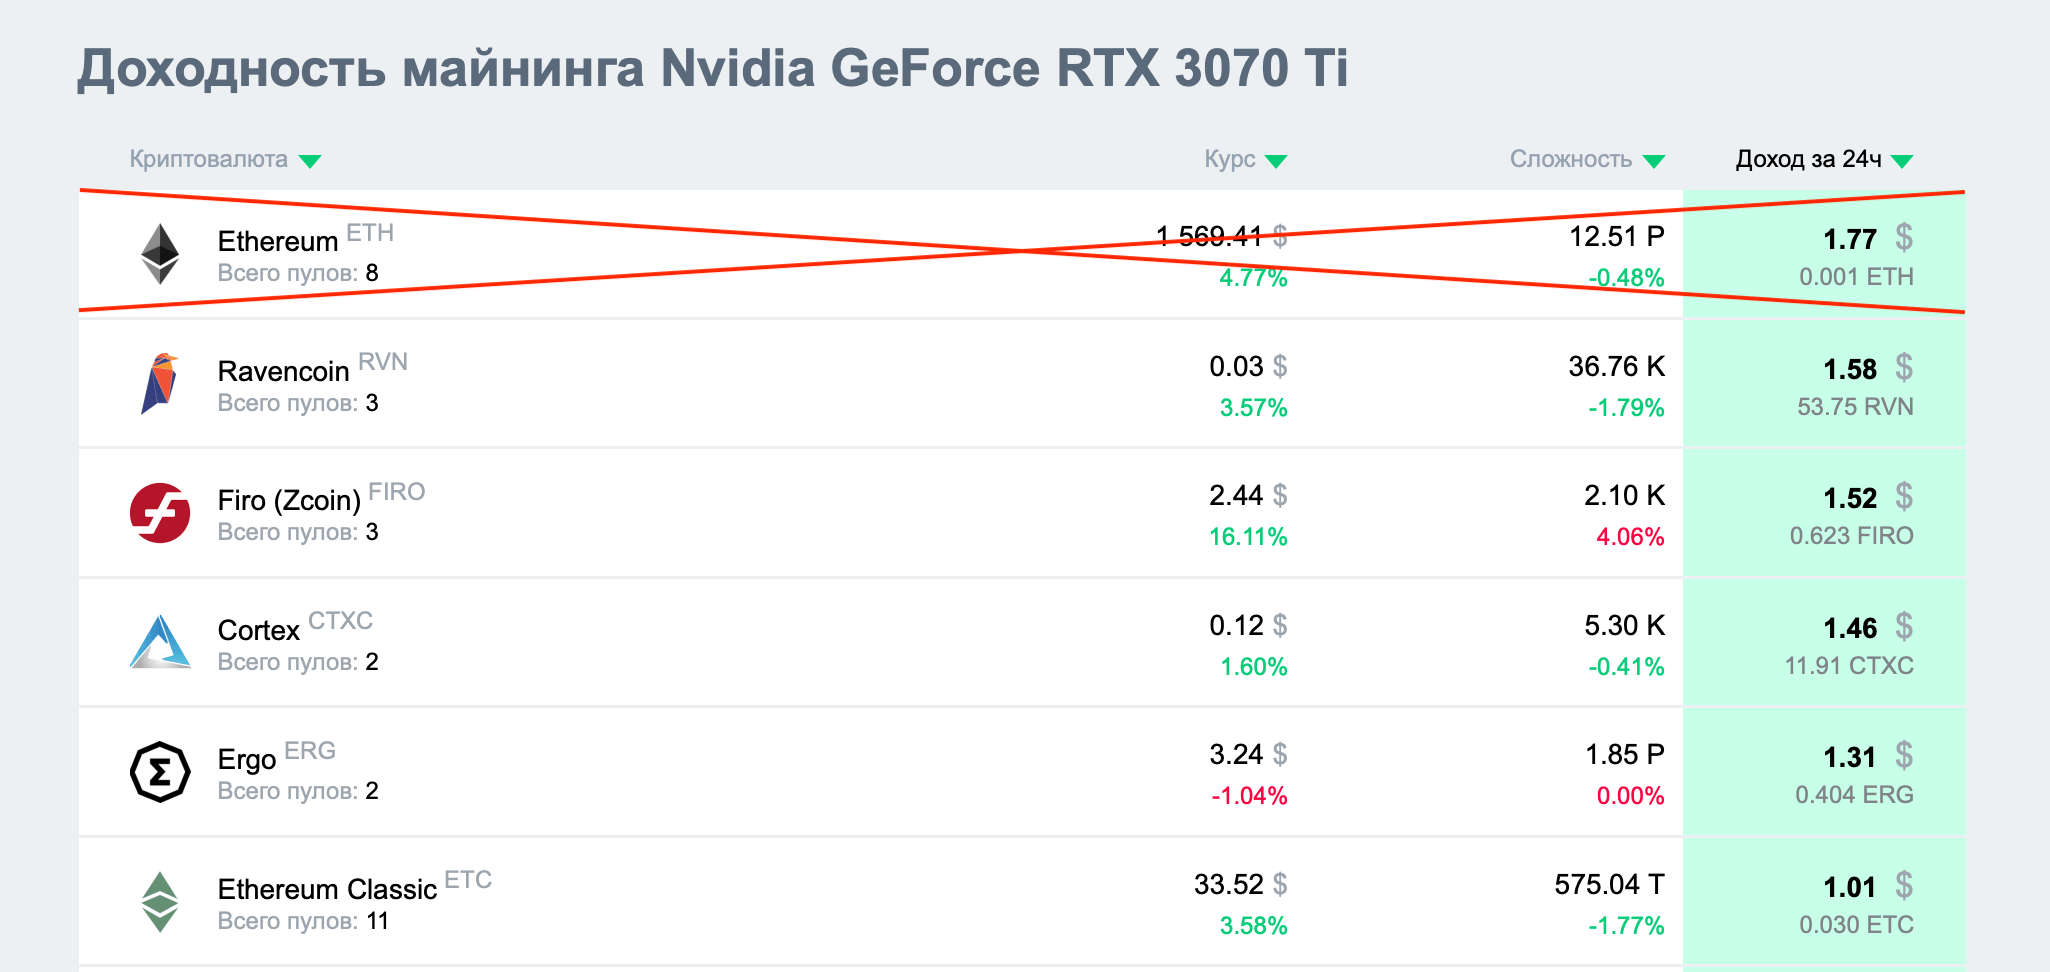 Nvidia GeForce RTX 3070 Ti майнинг